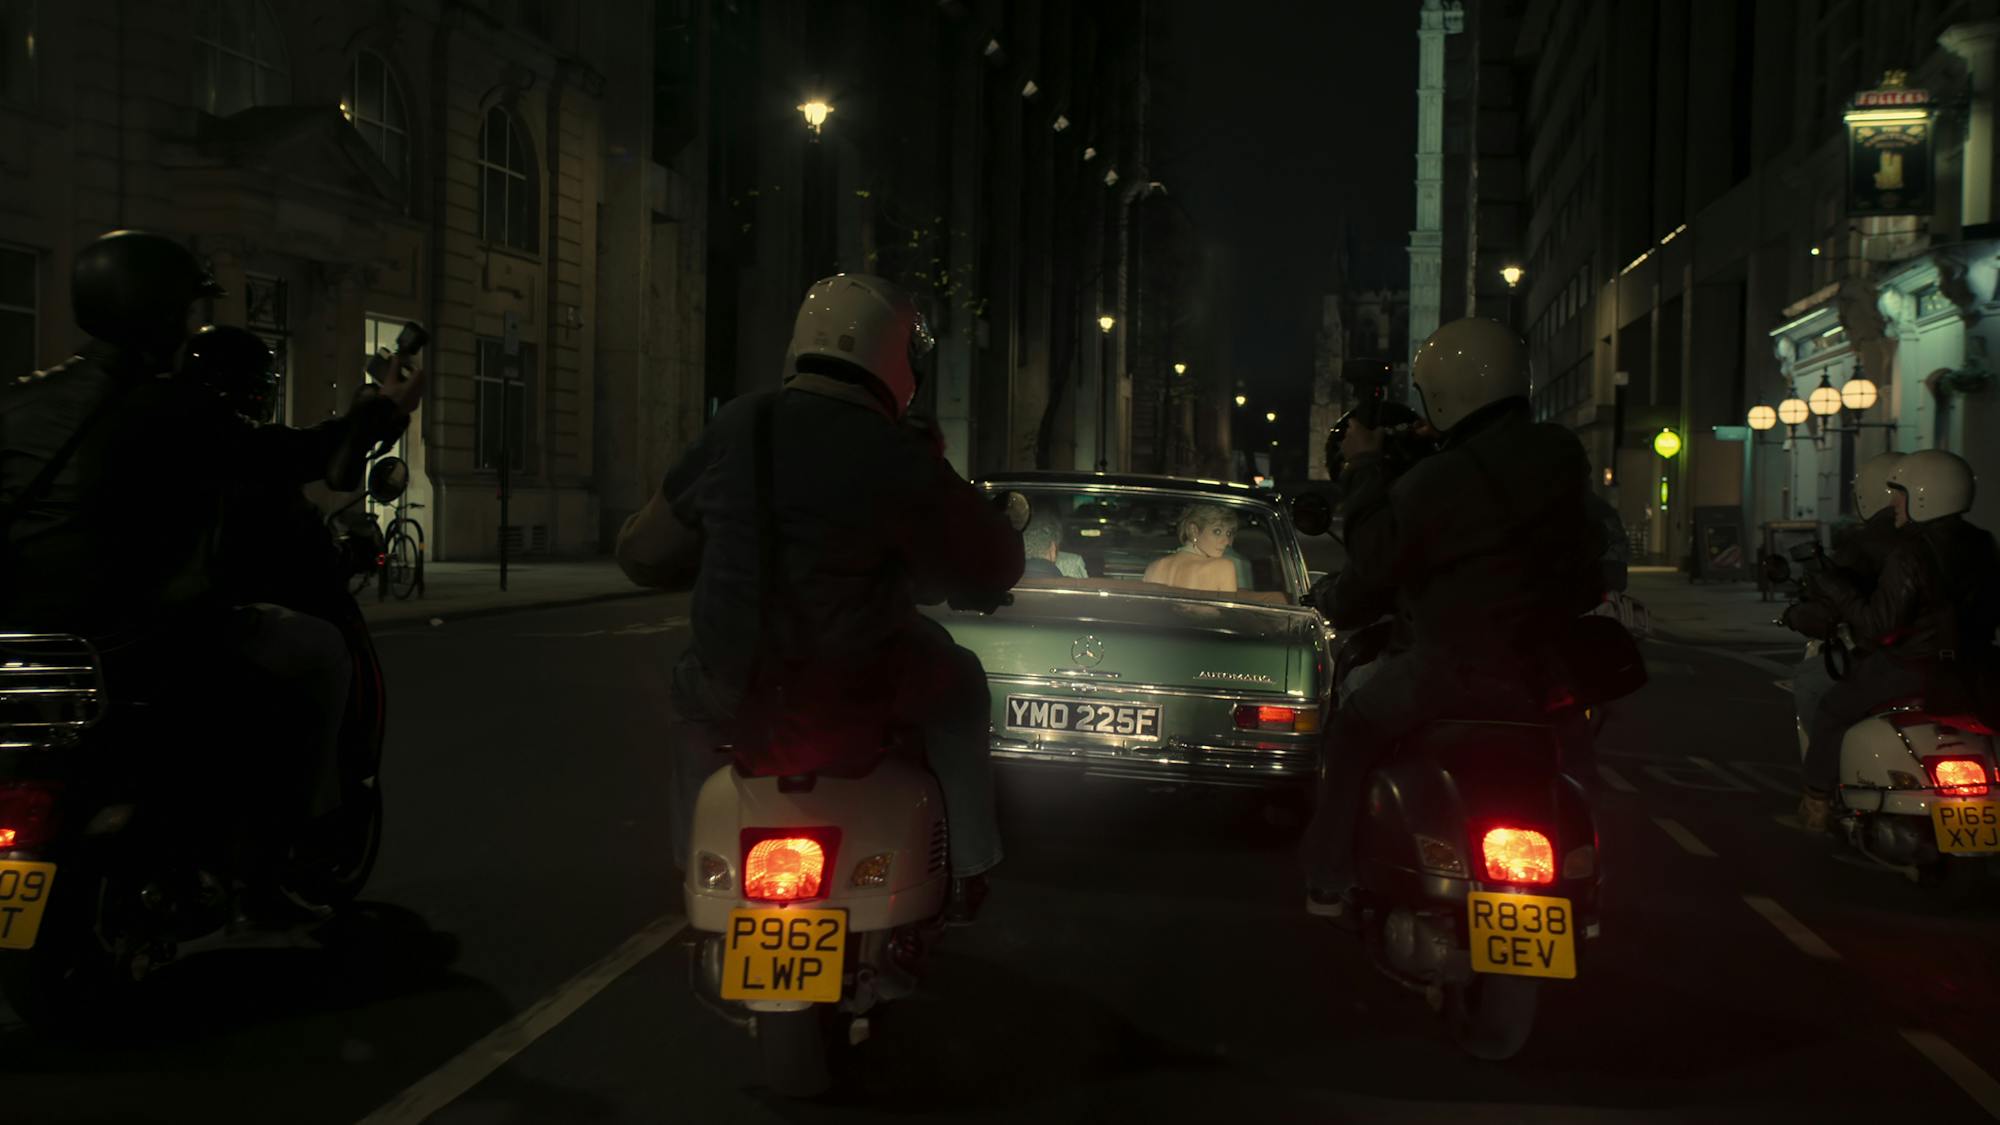 Princess Diana (Elizabeth Debicki) sits in a green car, getting followed by paparazzi on motorcycles.